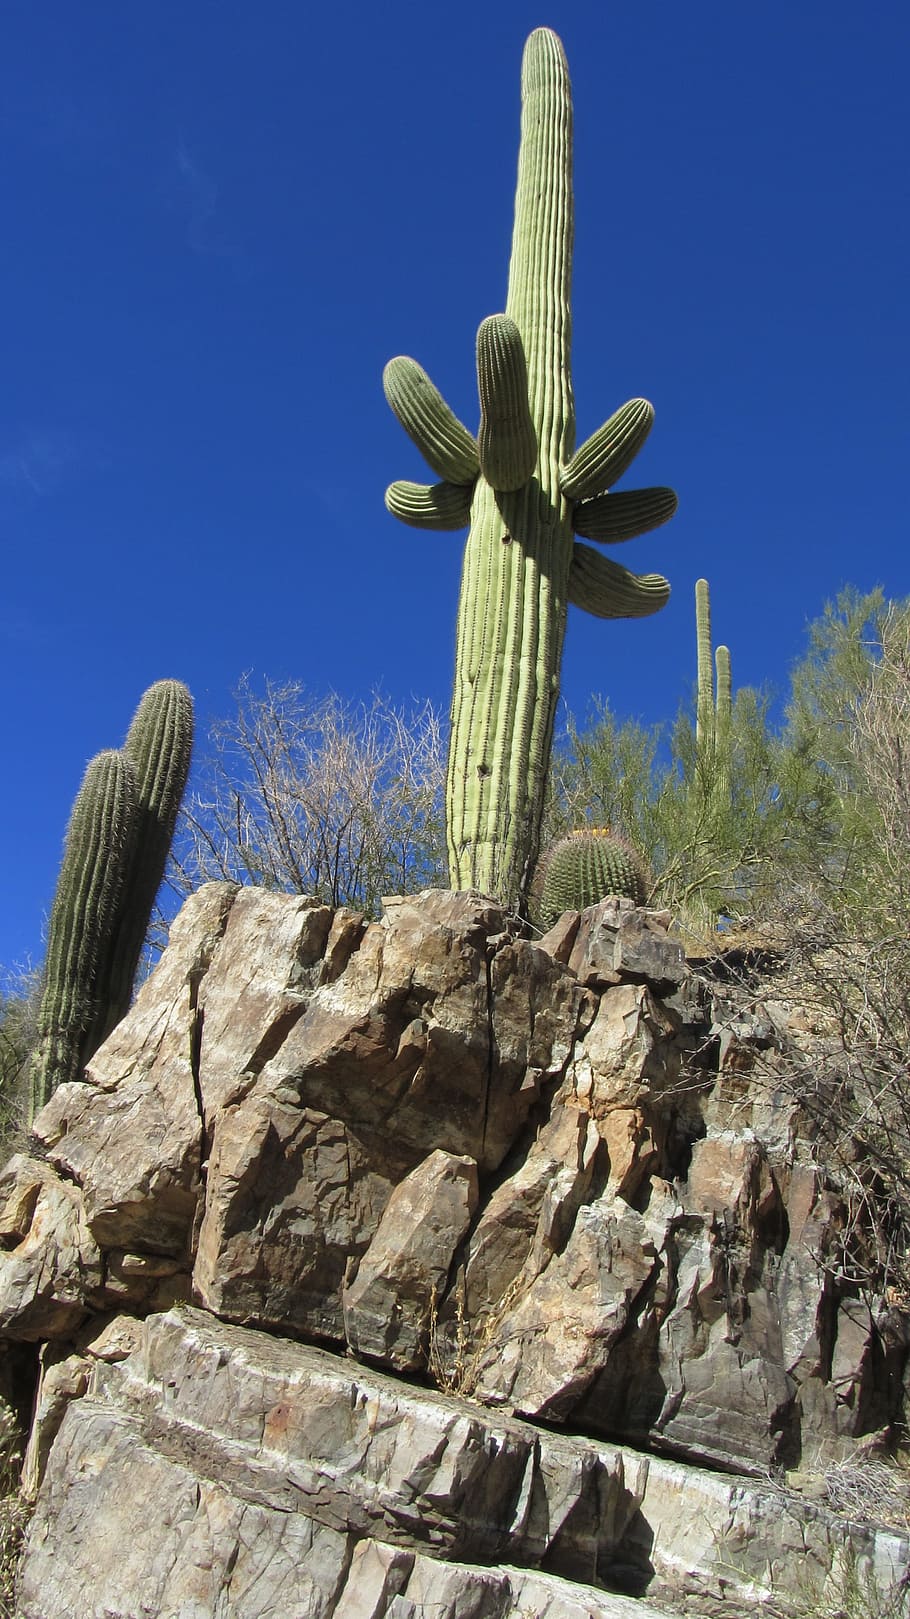 Kaktus, Tucson, Arizona, Lansekap, tanaman, alami, botani, organik, ramuan, pertanian